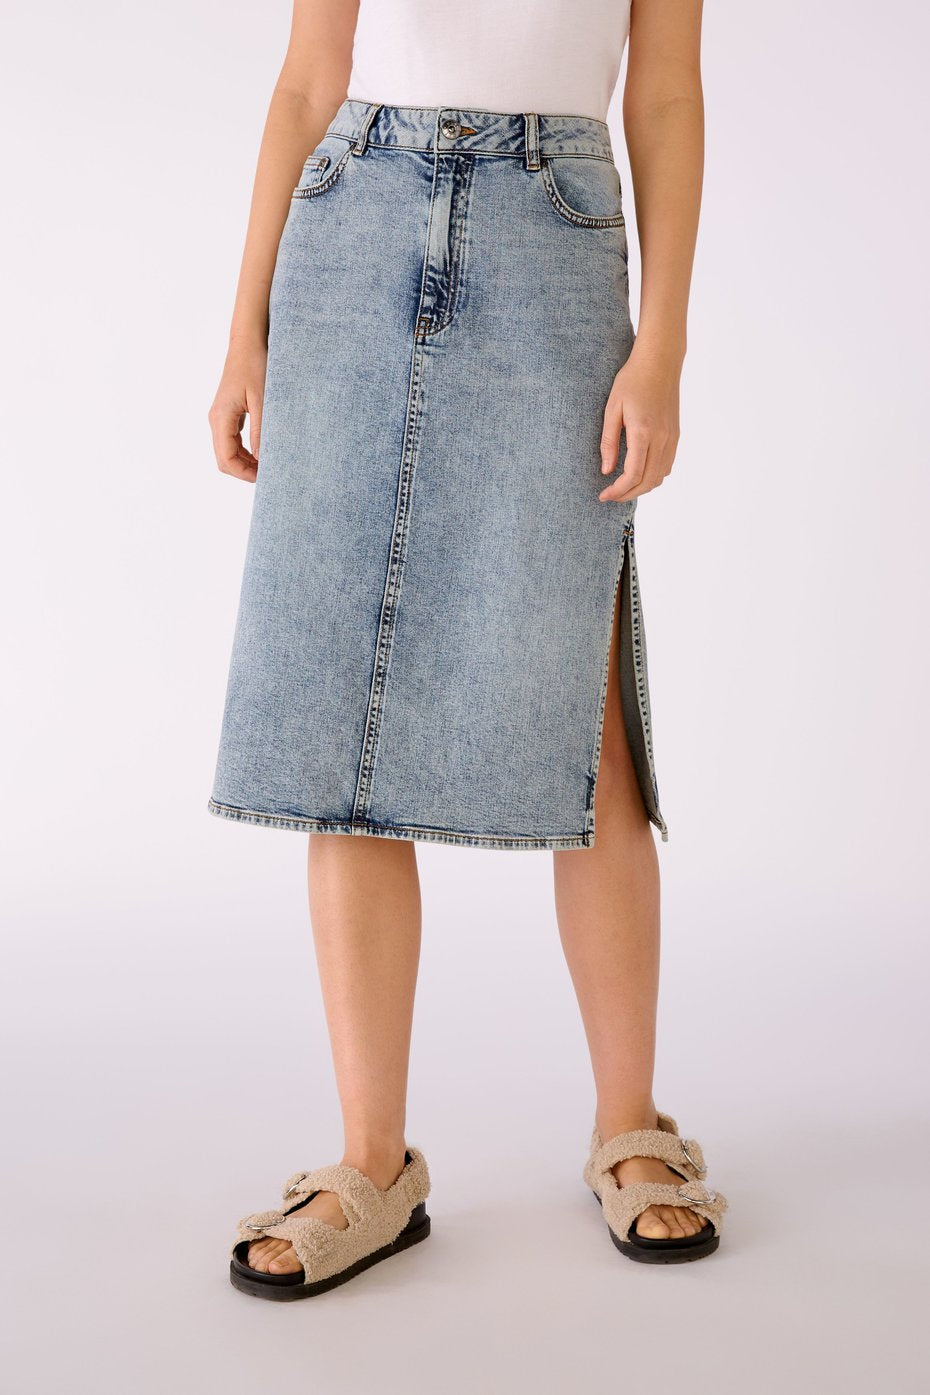 Sotala Women's jeans dungarees mini skirt dungarees denim skirt